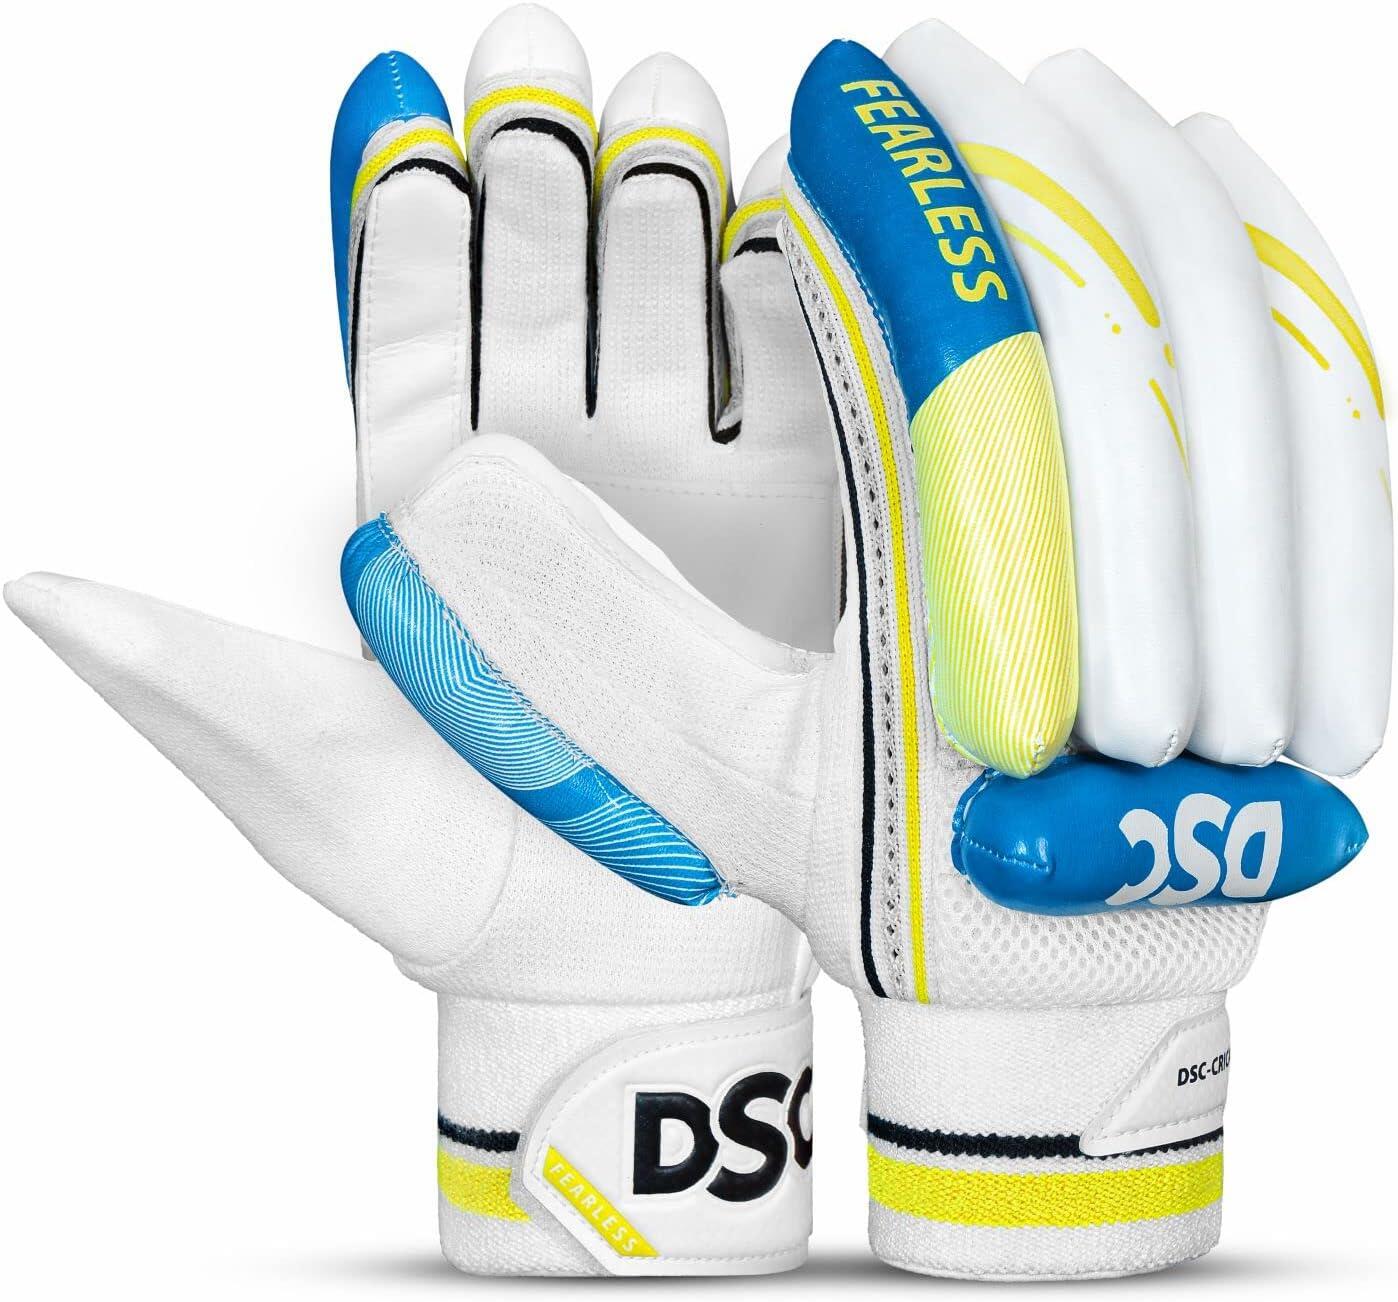 DSC DSC Condor Ruffle Leather Cricket Batting Gloves